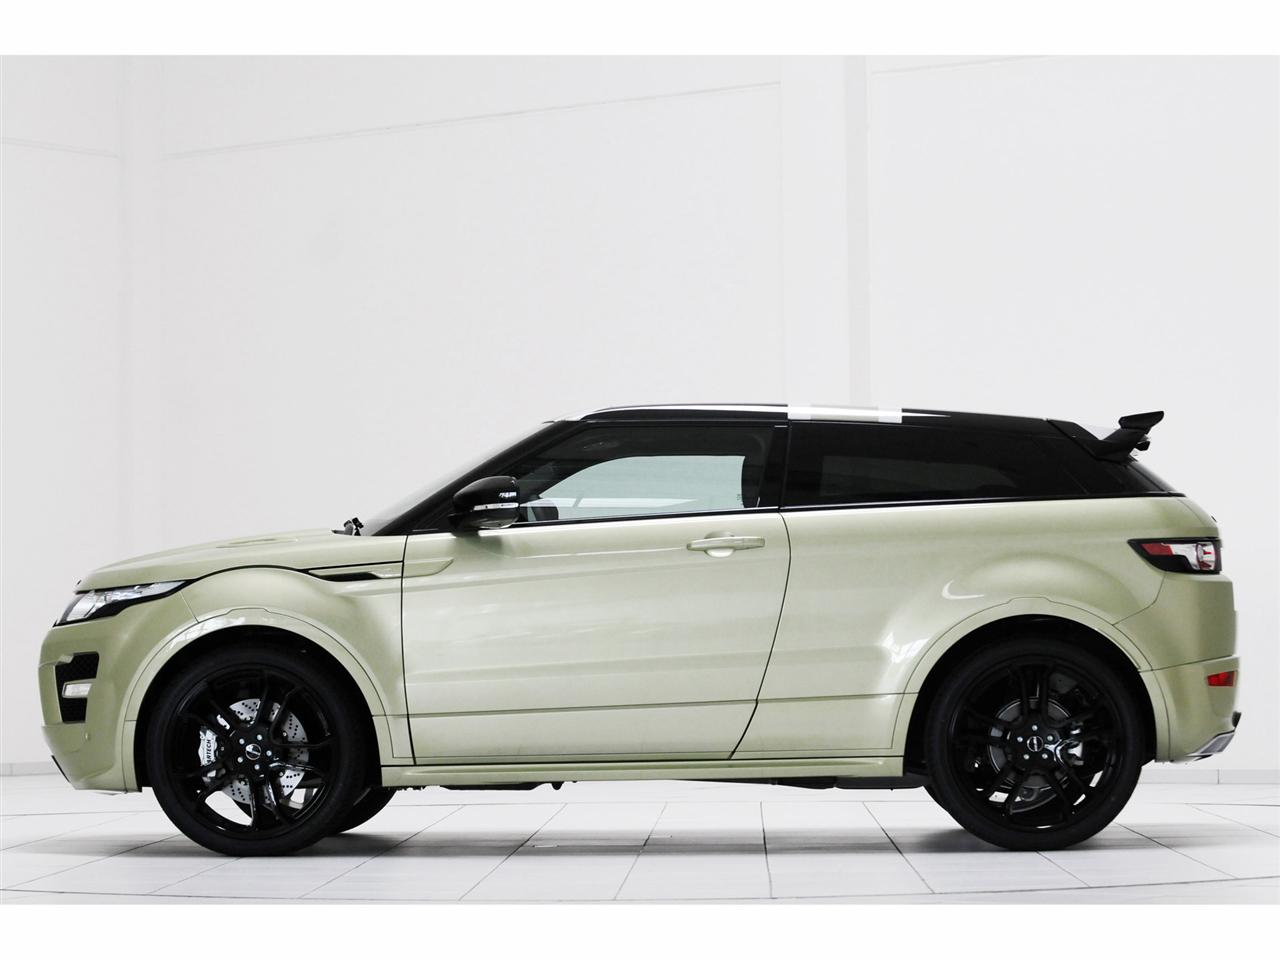 2012 Startech Range Rover Evoque